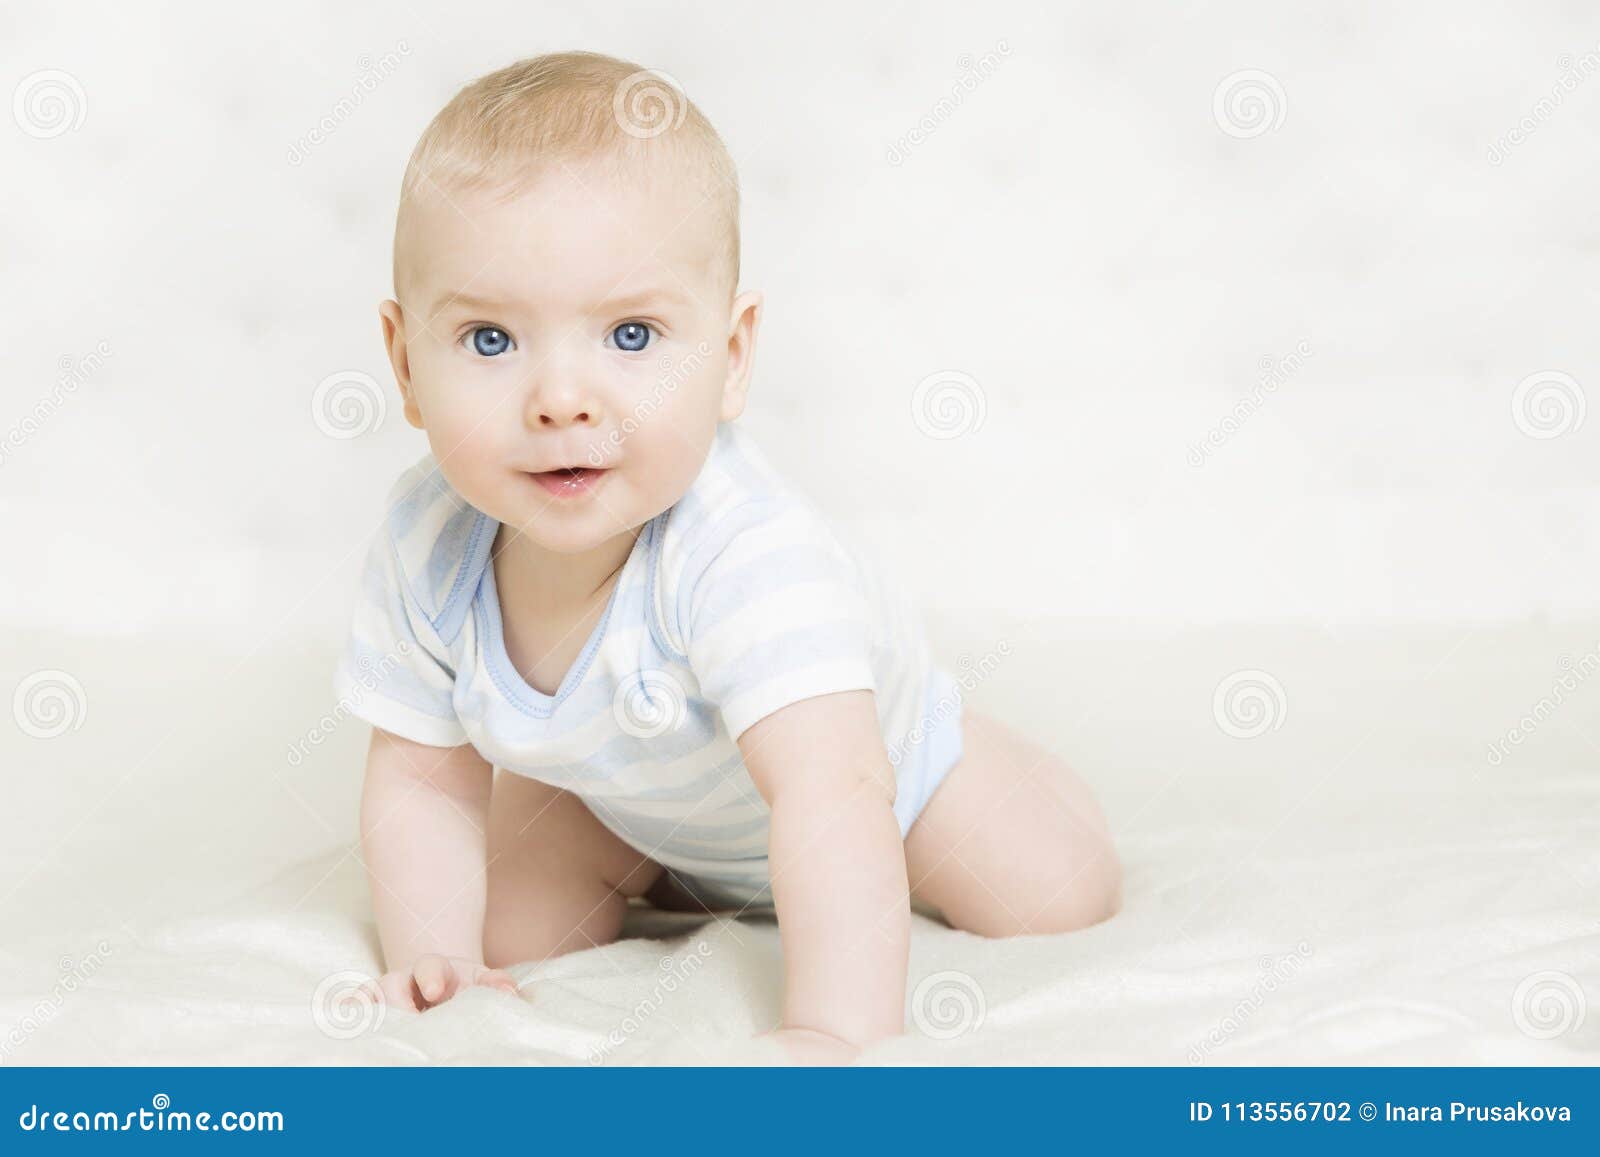 Baby Crawling on White Carpet, Infant Kid Boy Portrait Stock Photo ...